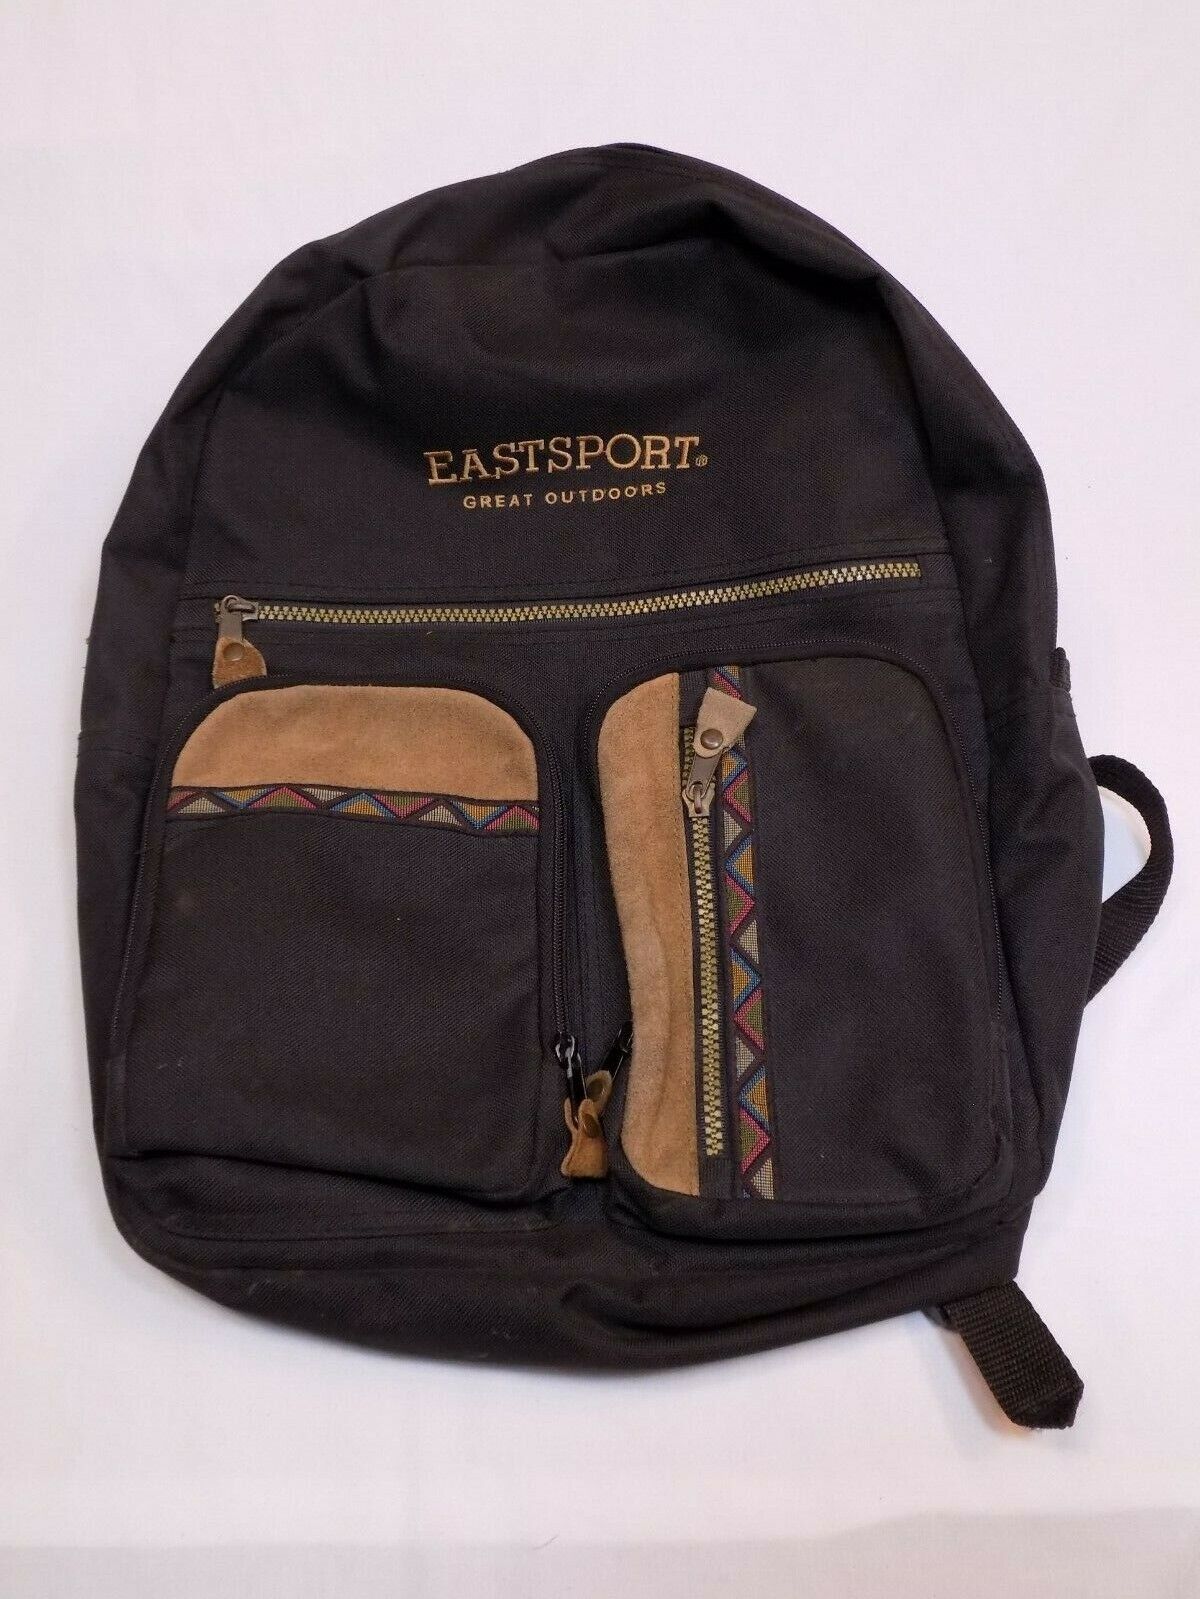 Eastsport Great Outdoors Black w/ Suede Unisex Student Backpack bookbag School